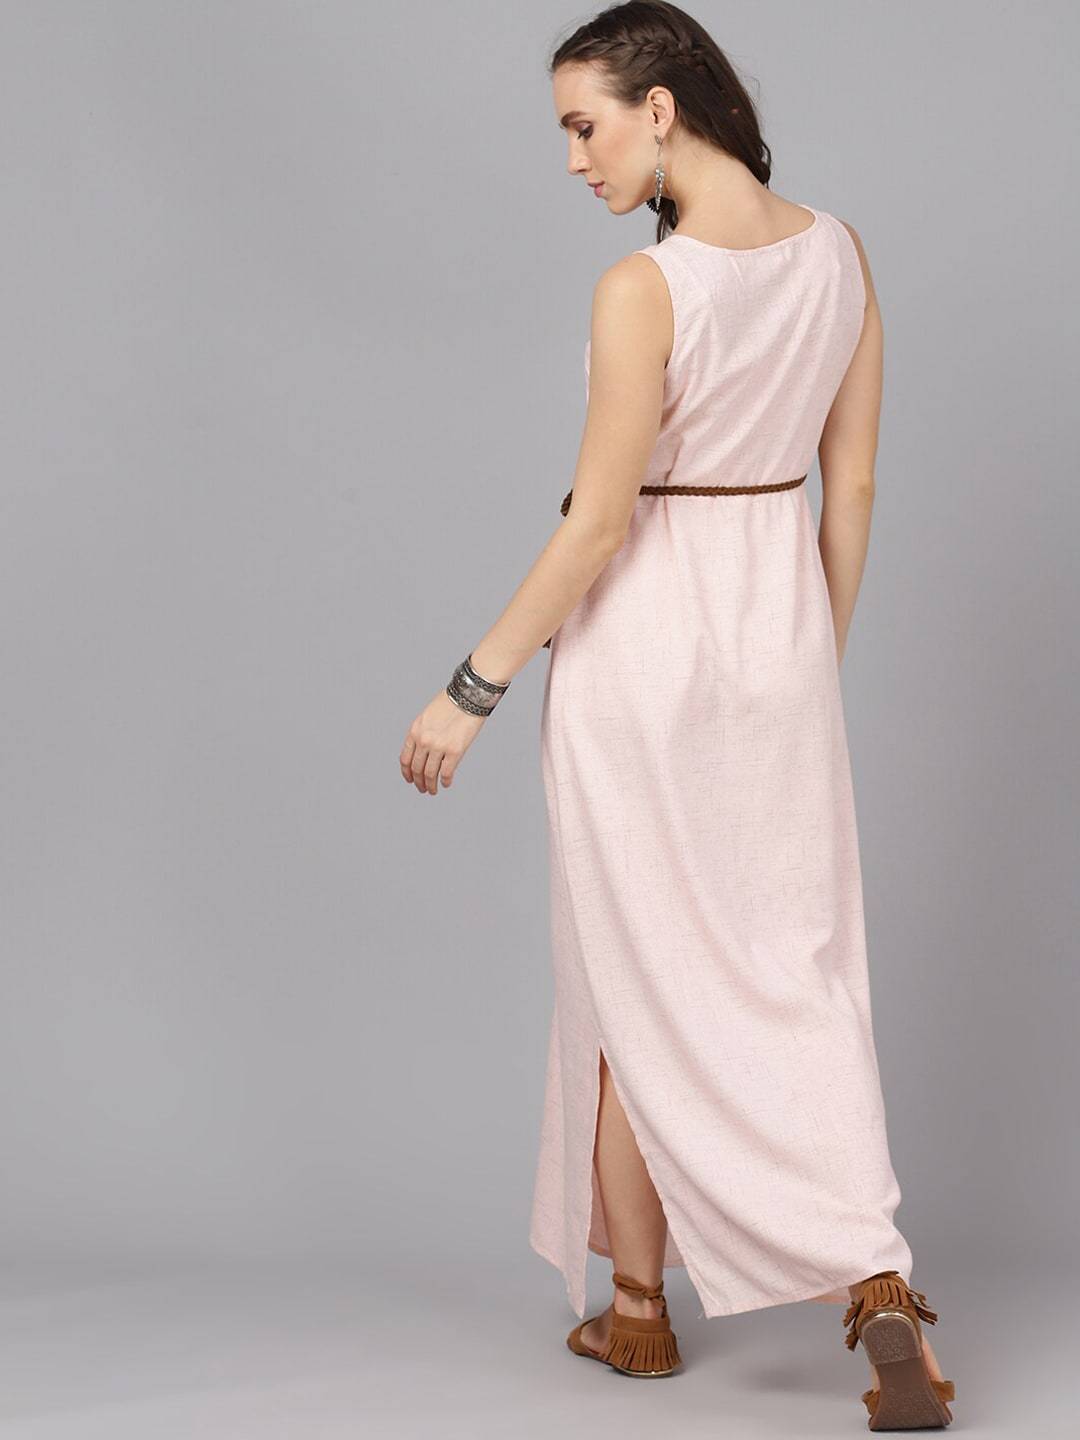 Women's  Peach-Coloured Self Design Maxi Dress - AKS